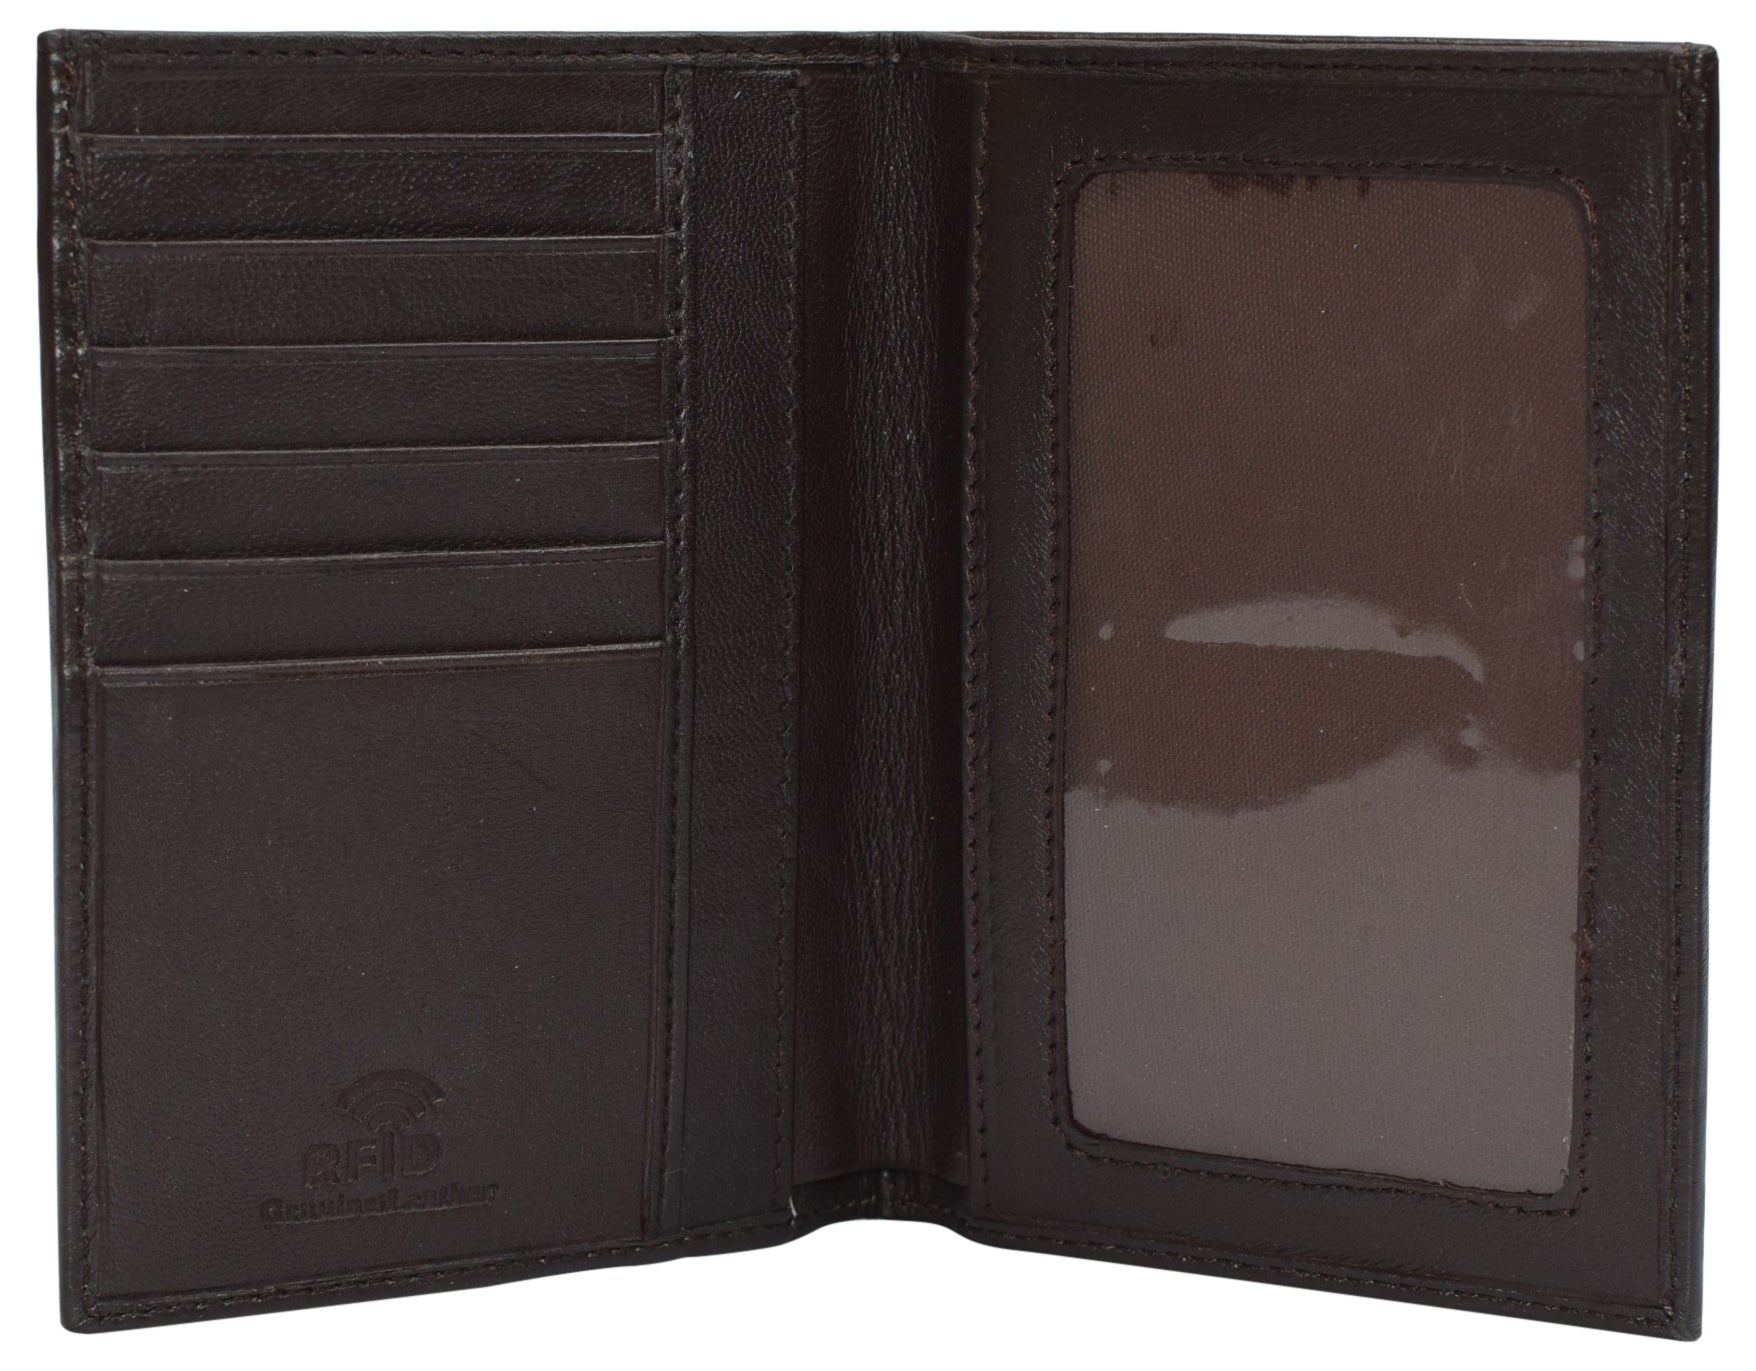 Kangaroo Leather Passport Wallet